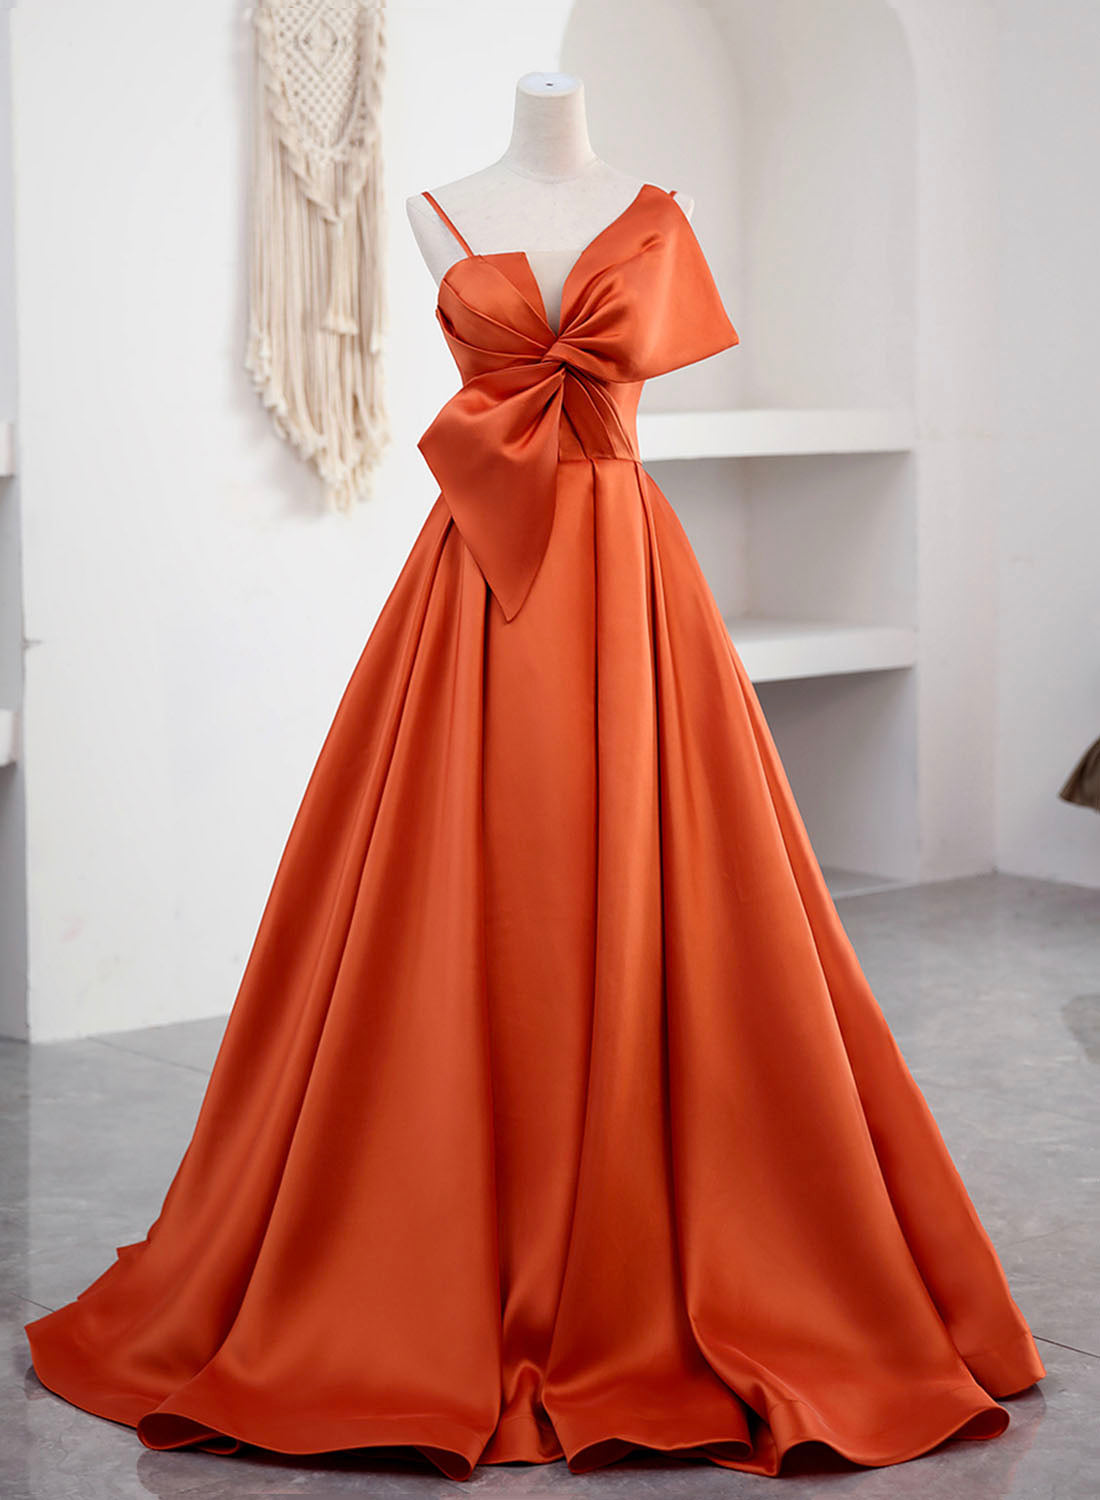 Party Dress Aesthetic, Spaghetti Straps Orange Satin Prom Formal Dress, A-Line Floor Length Evening Dress